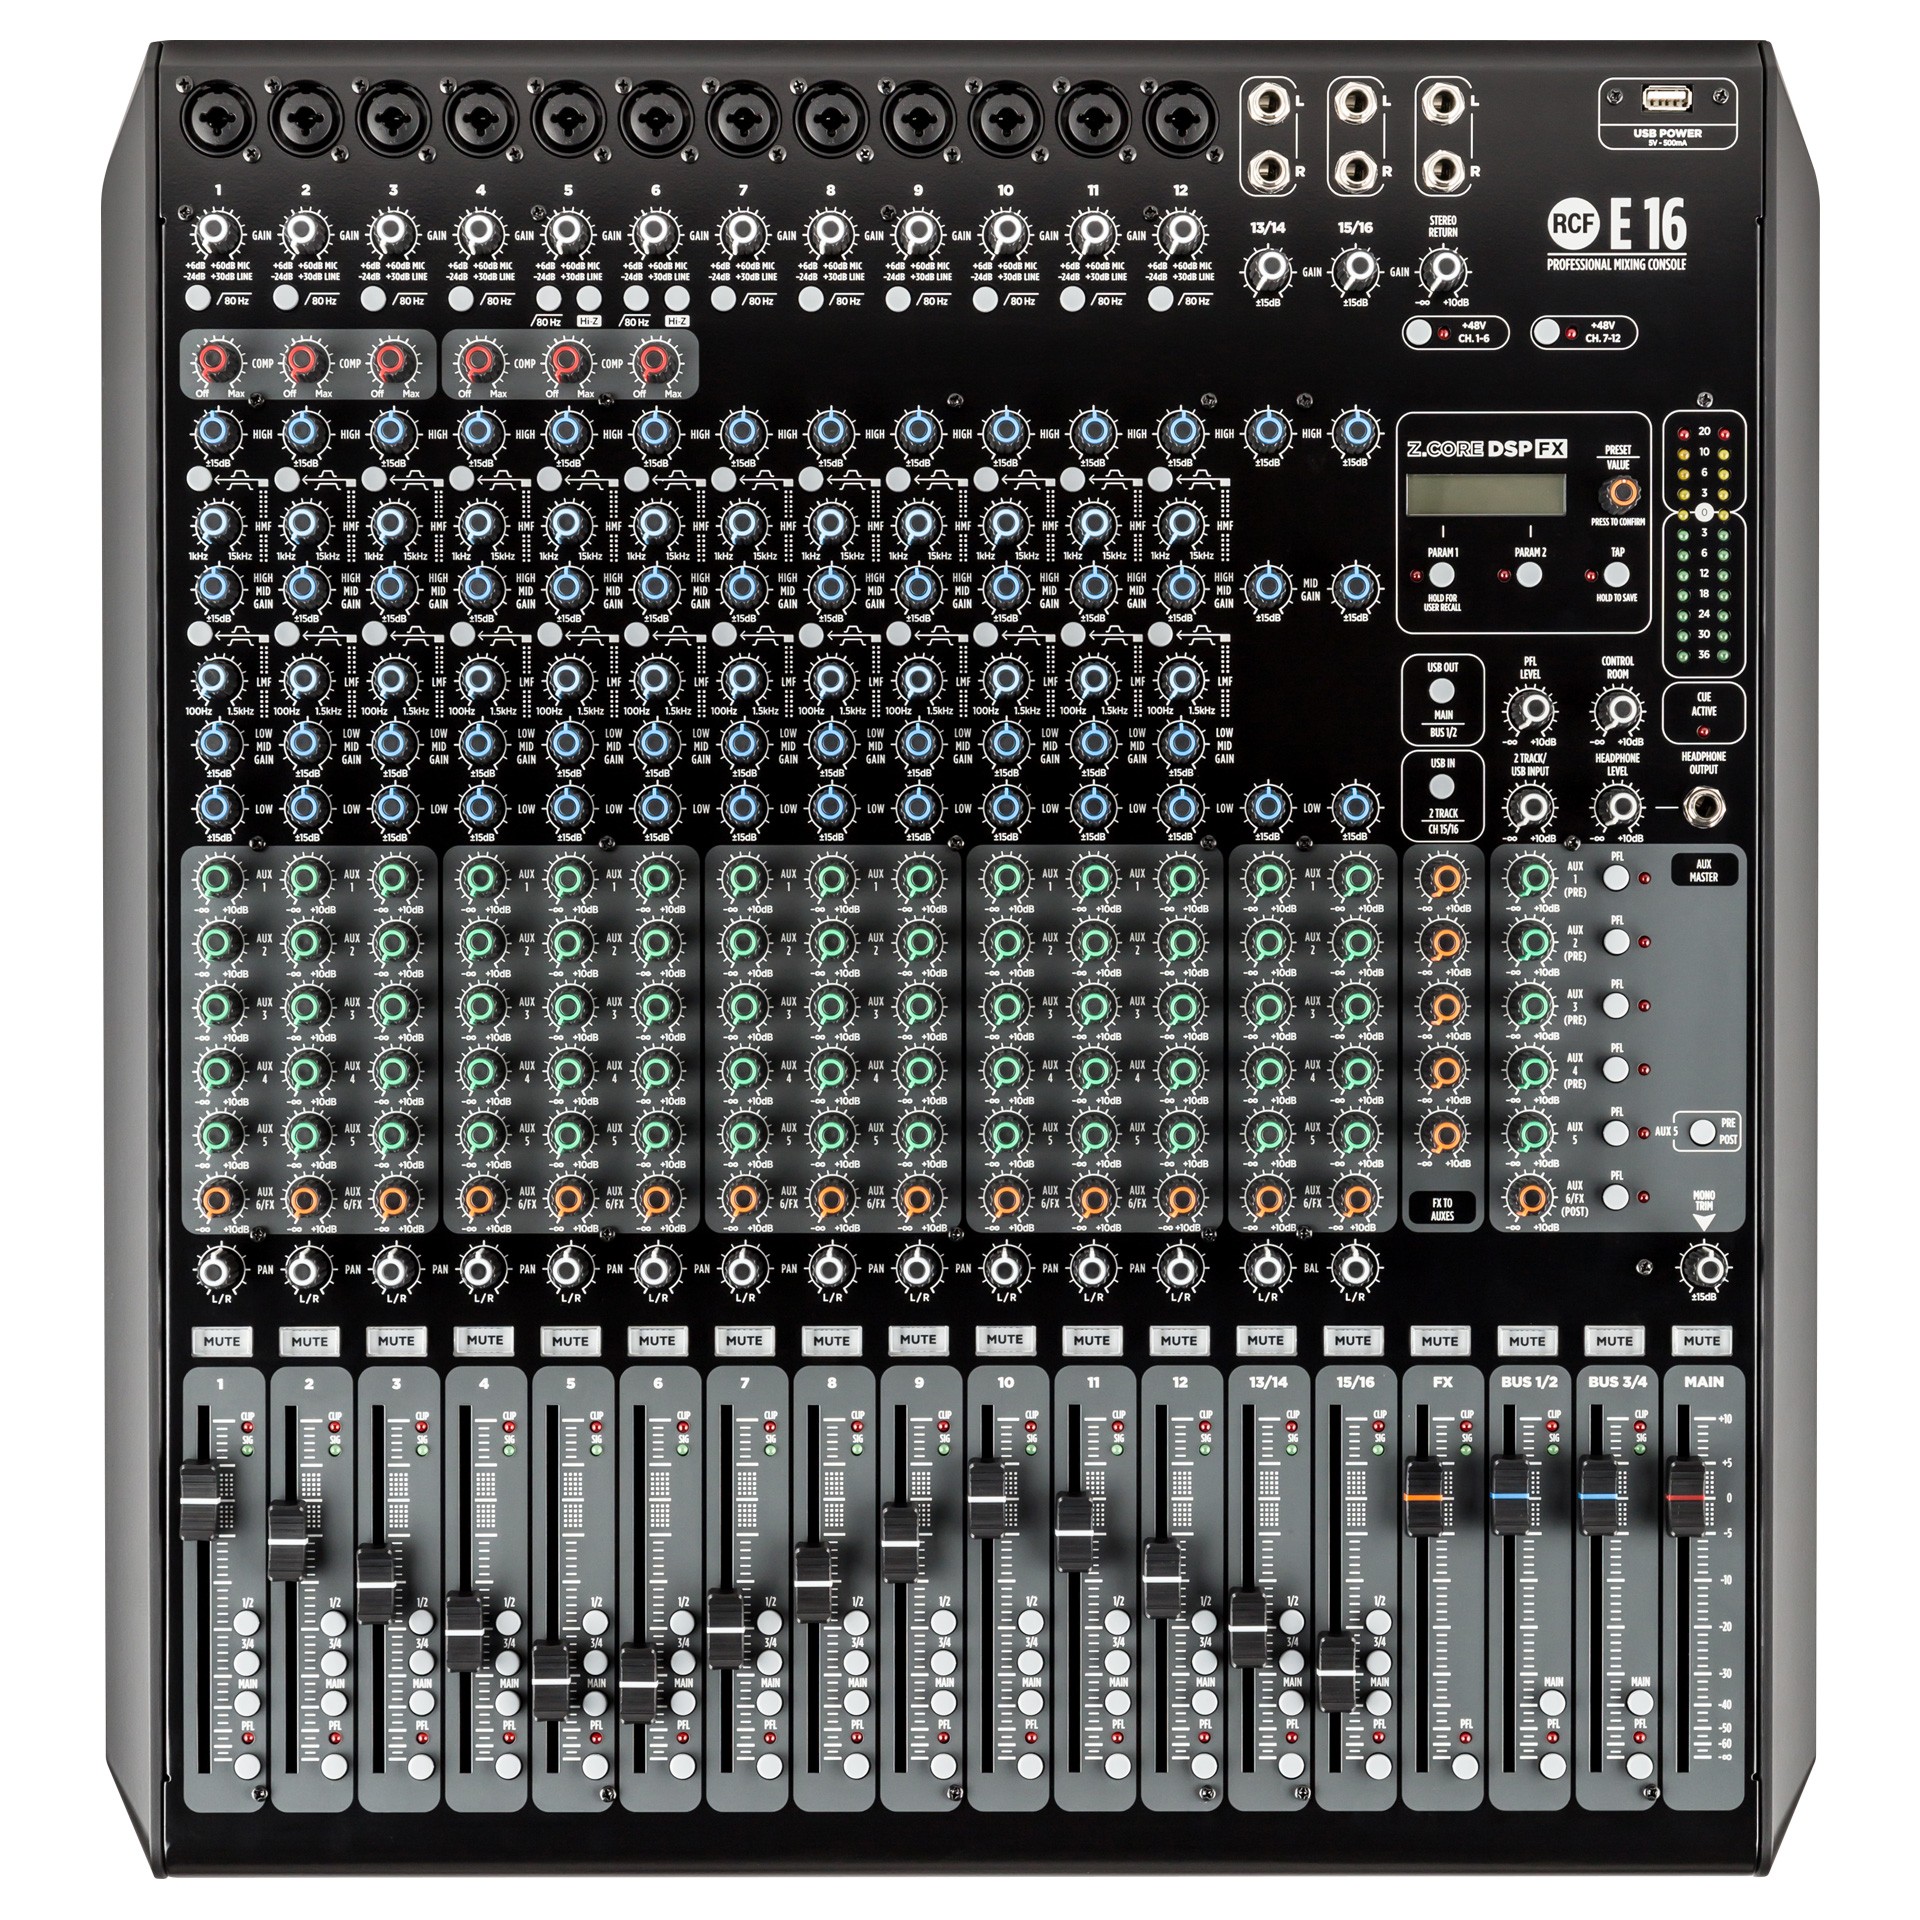 Mixere analogice - Mixer analog RCF E 16, audioclub.ro